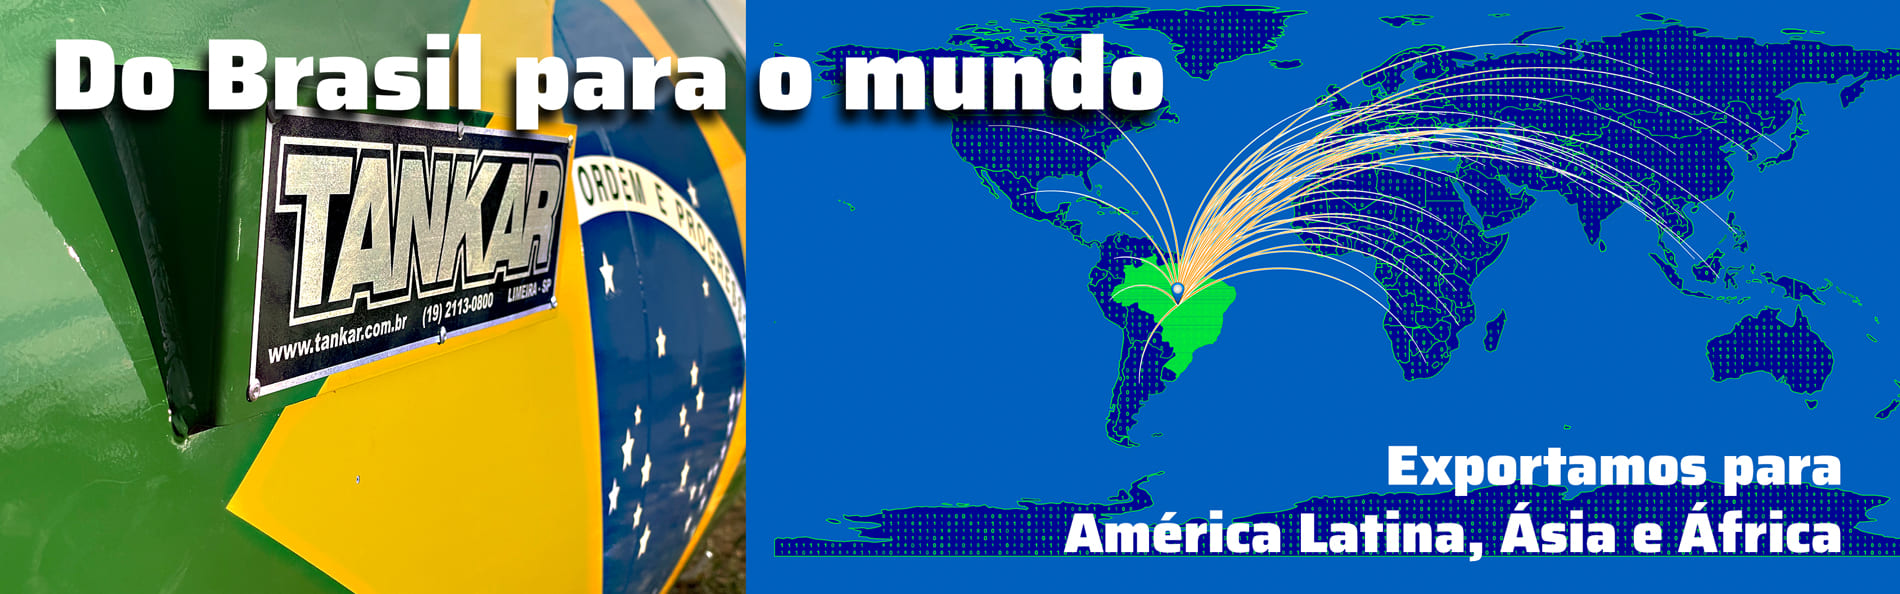 Do Brasil para o mundo: Exportamos para América Latina, Ásia e África 